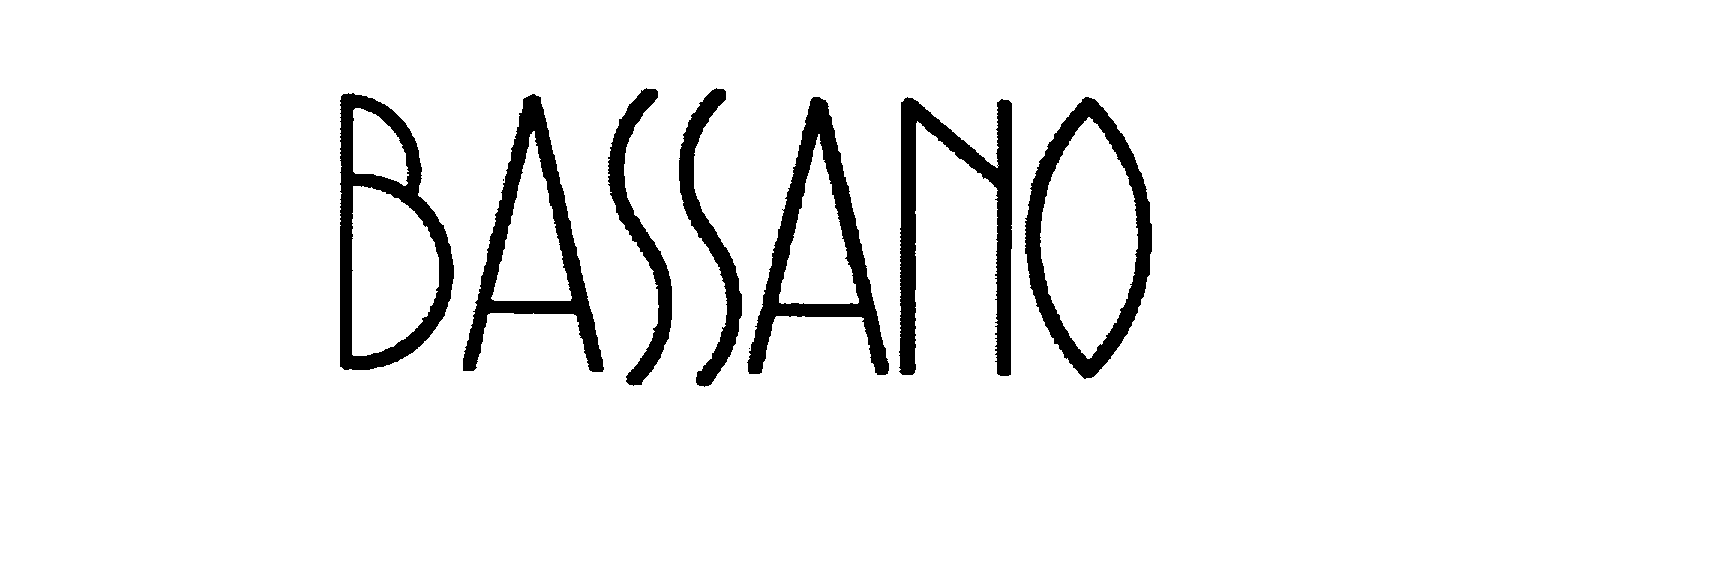 BASSANO